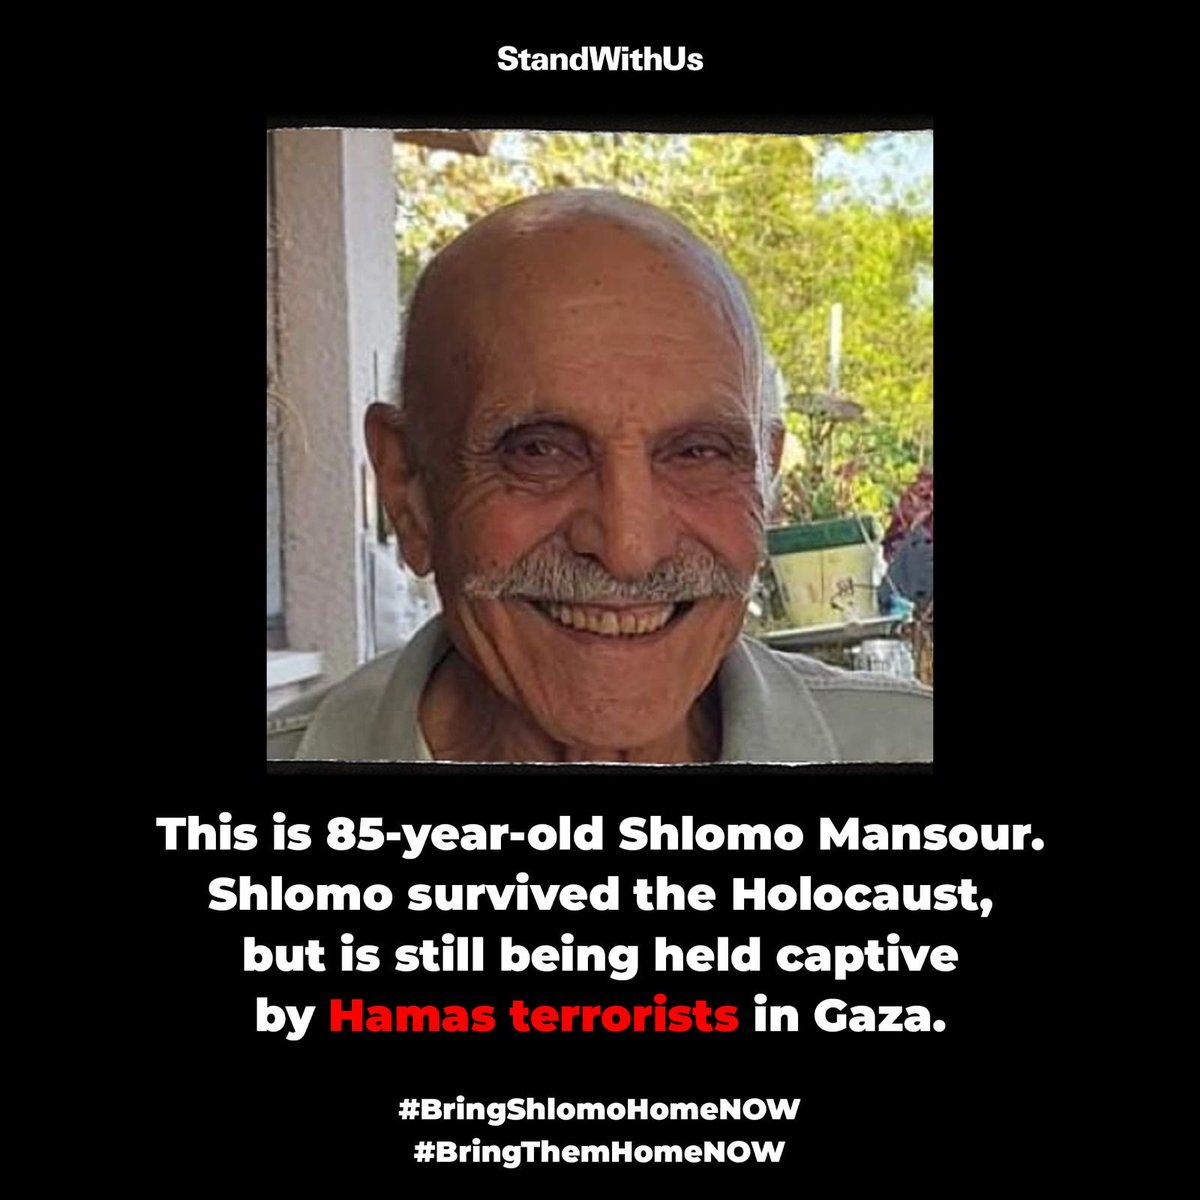 Shlomo survived the Holocaust. We MUST make sure that Shlomo survives this to. We #BringShlomoHomeNOW! #BringThemALLHomeNOW 🇮🇱🇮🇱💕💕✡️✡️